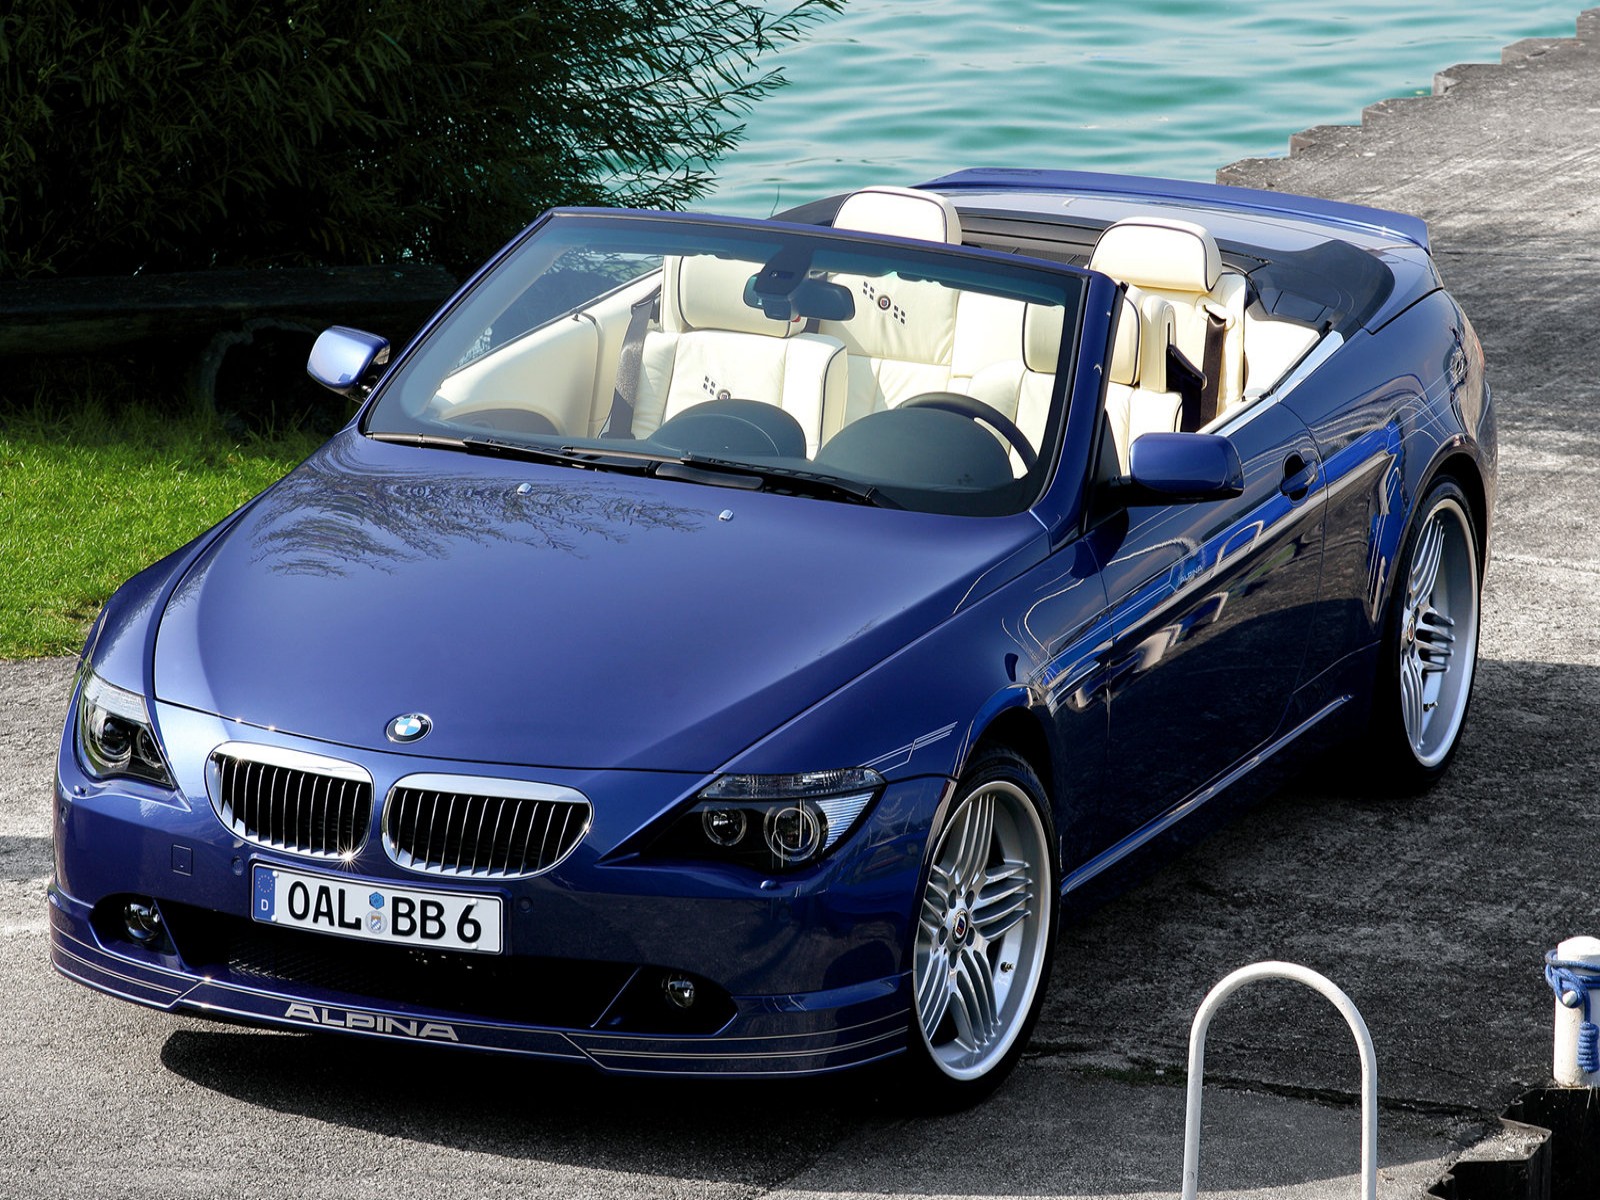 https://blogger.googleusercontent.com/img/b/R29vZ2xl/AVvXsEj29ycIhqNuX1eMIEesmXyjvFPHLiNShIVh2DjQpsyNHy6Jq9N302b8mC7eAaUxMmi0kmM2uuRCQlkMJryJuLvMavSdaGOj457_OE75nvI-h78QvnfbvjiOqPFIBdJ4OVPOu_dm1dMskYUj/s1600/2006+Alpina+BMW+B6+Cabrio+-+Car+Photo+Wallpaper.jpg